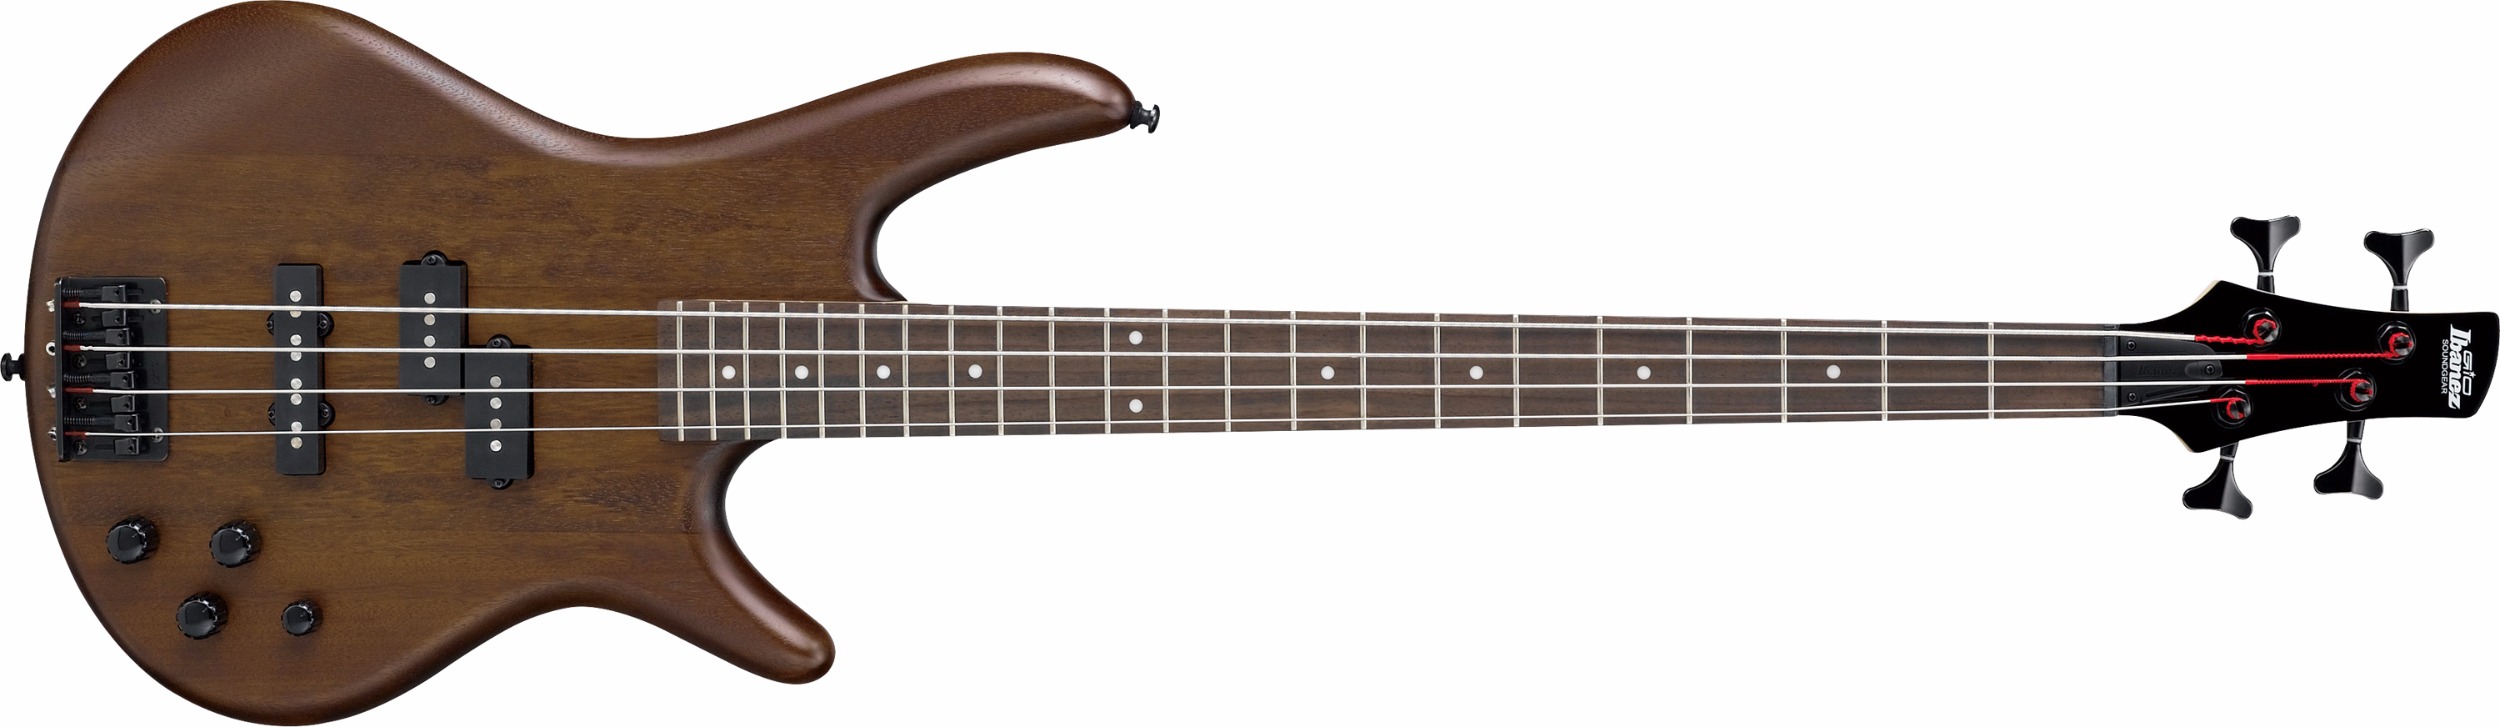 Ibanez GSR200B GIO 4-String Electric Bass Guitar (Walnut Flat Brown) -  GSR200BWNF